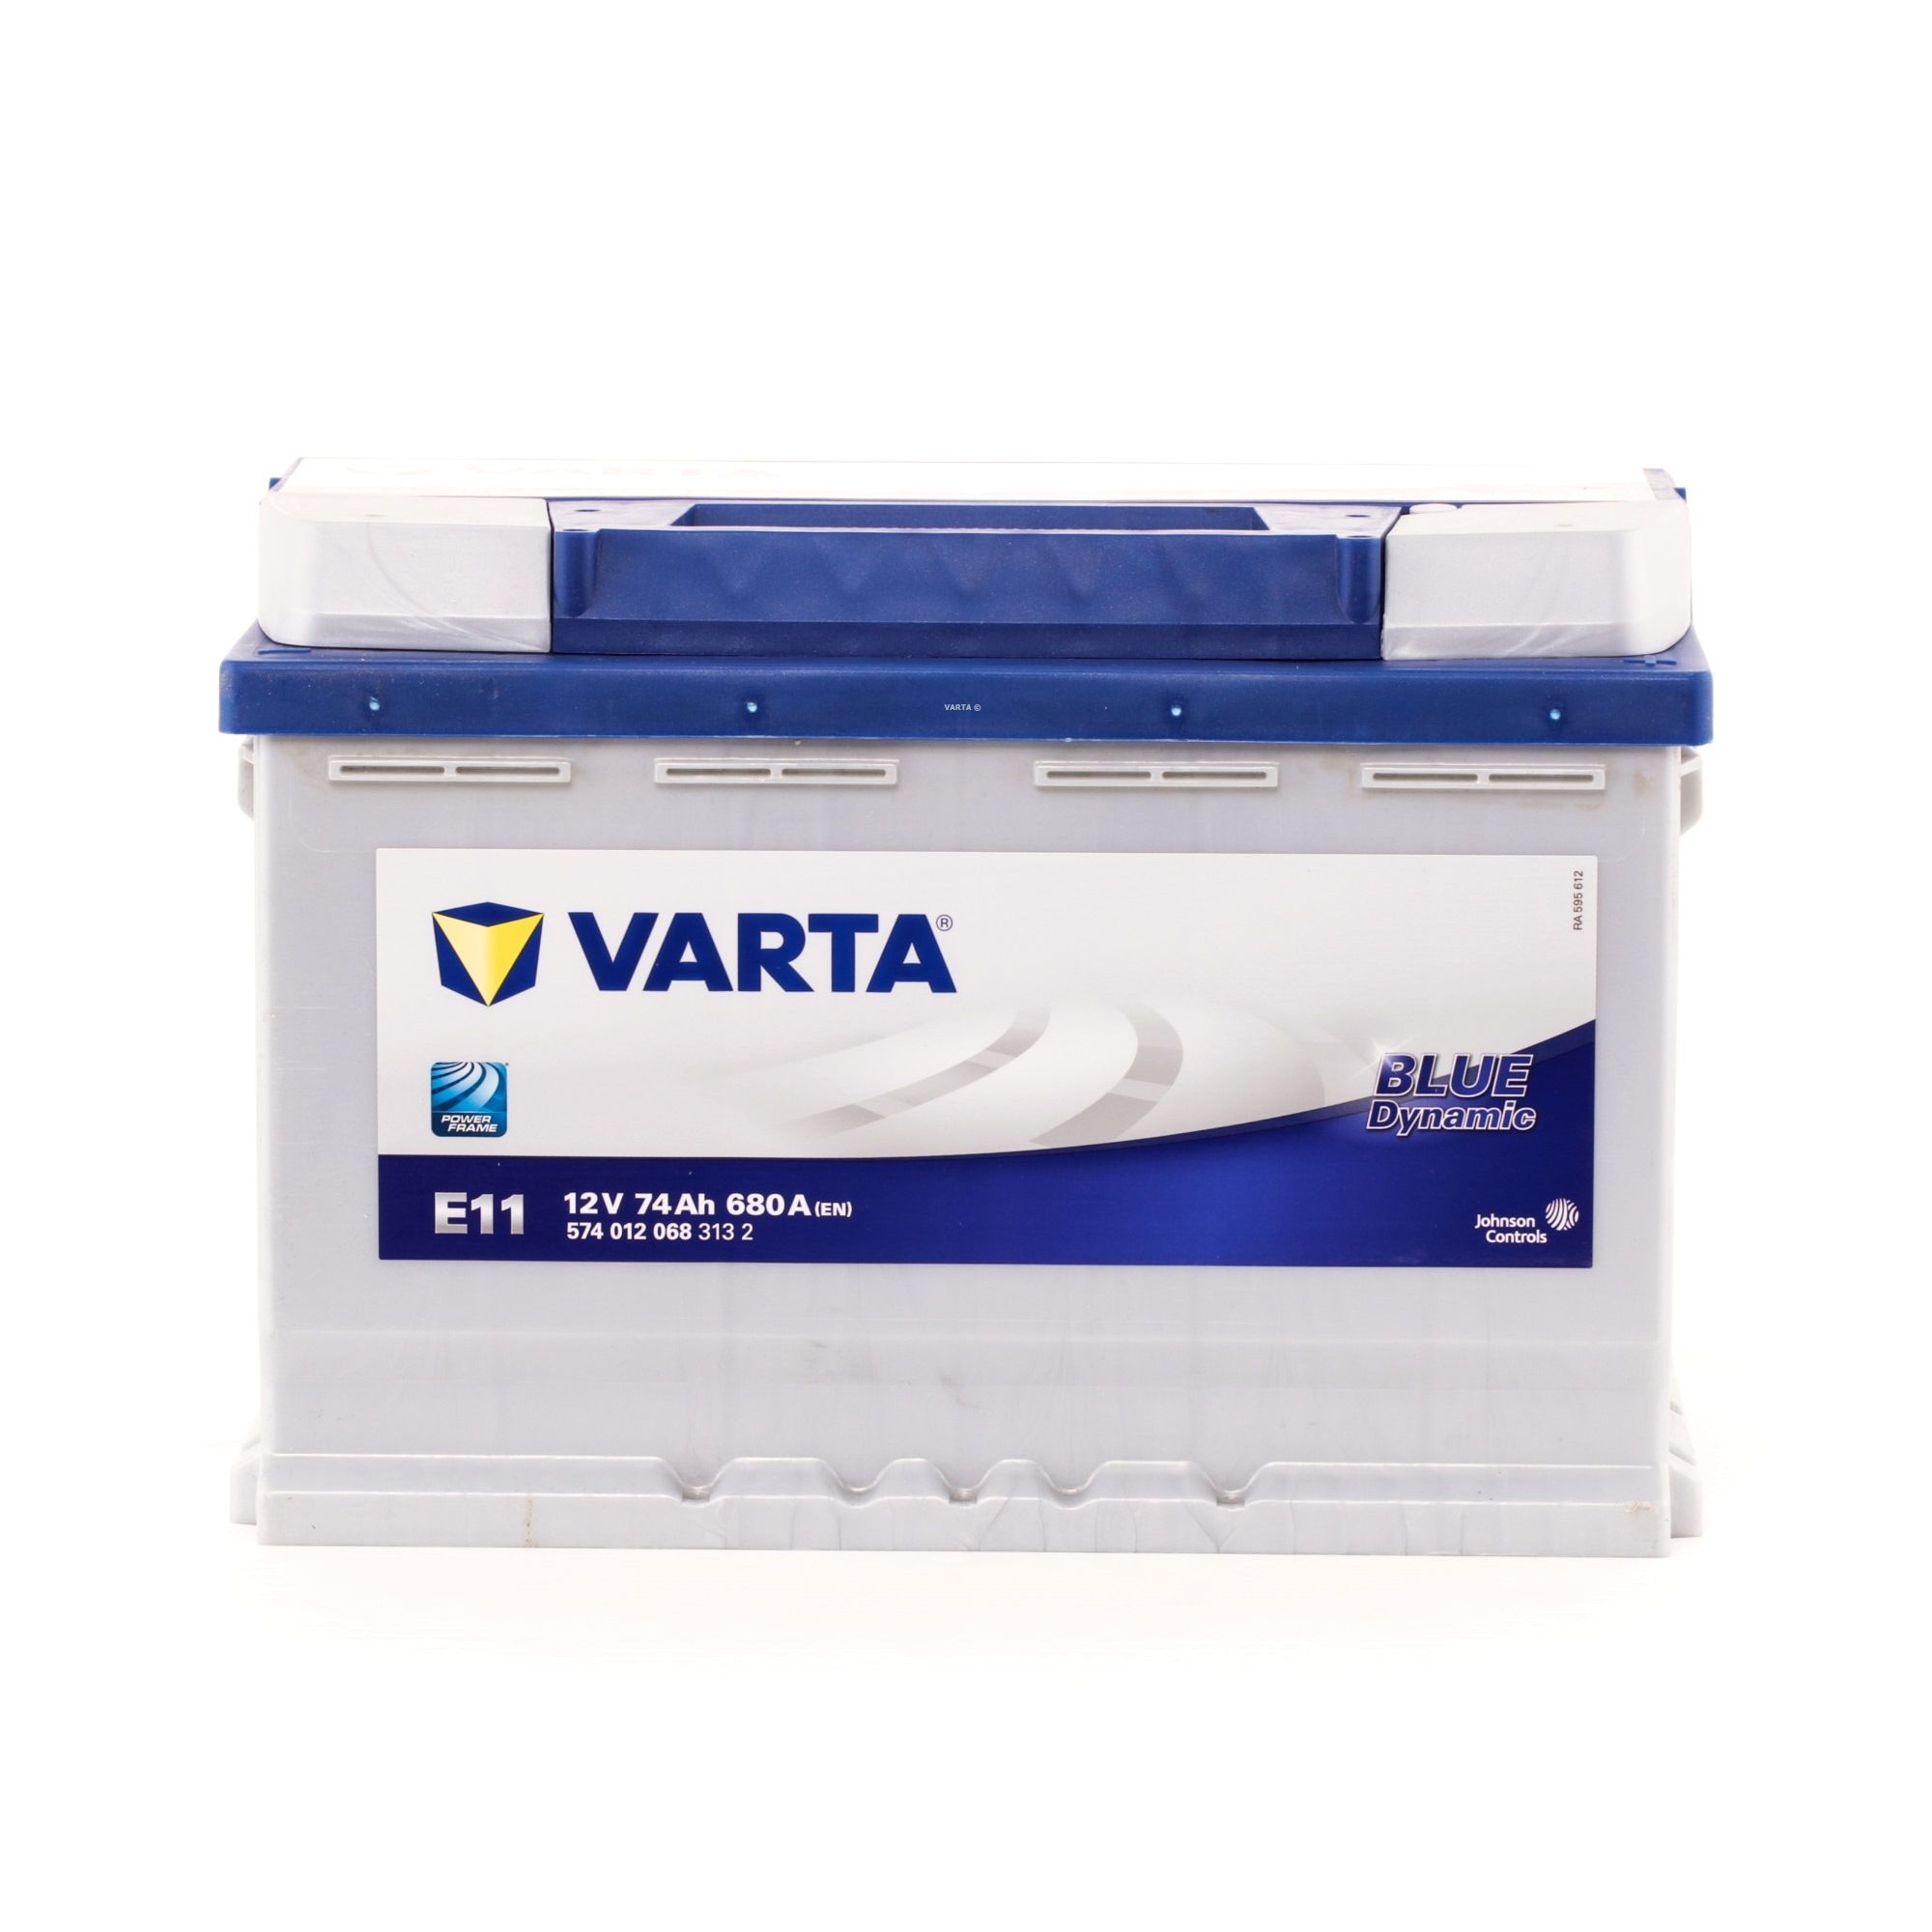 VARTA BLUE dynamic, E11 5740120683132 Start stop batteri 12V 74Ah 680A B13 Bly-syre batteri